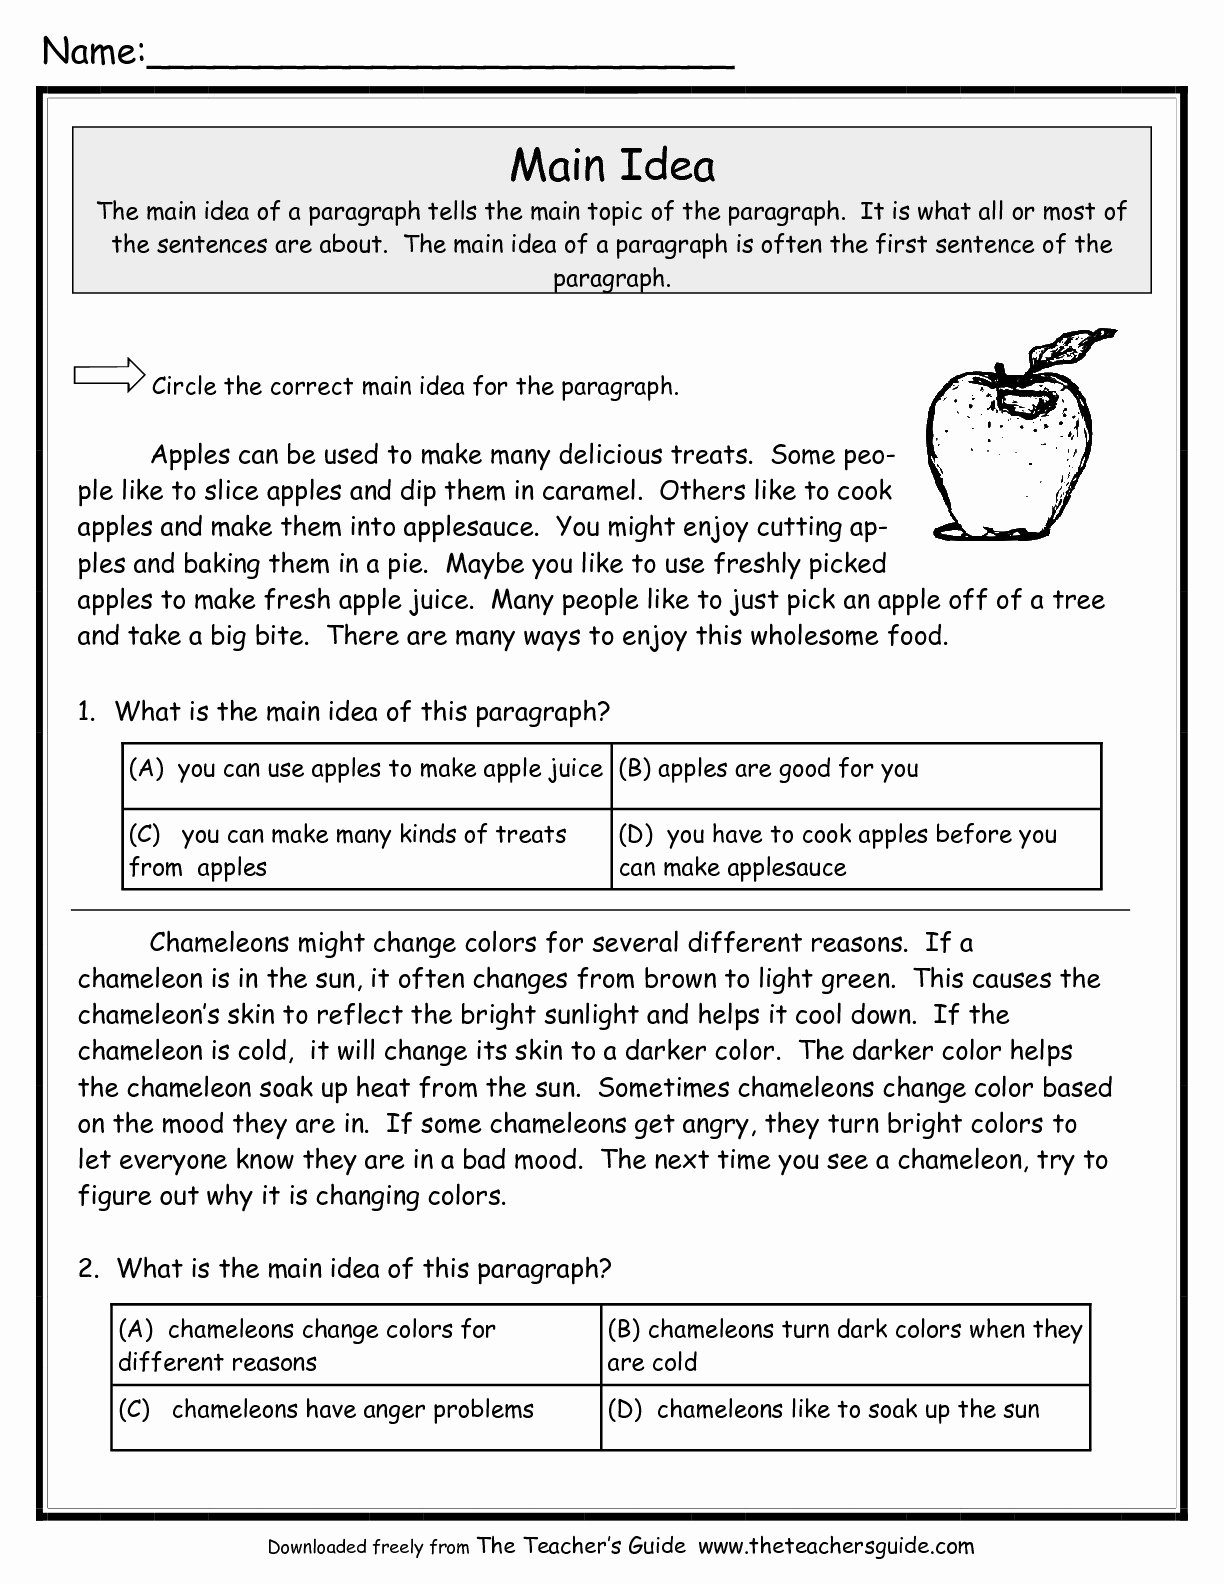 Main Idea Worksheet 4 Fresh Main Idea Worksheets From the Teacher S Guide